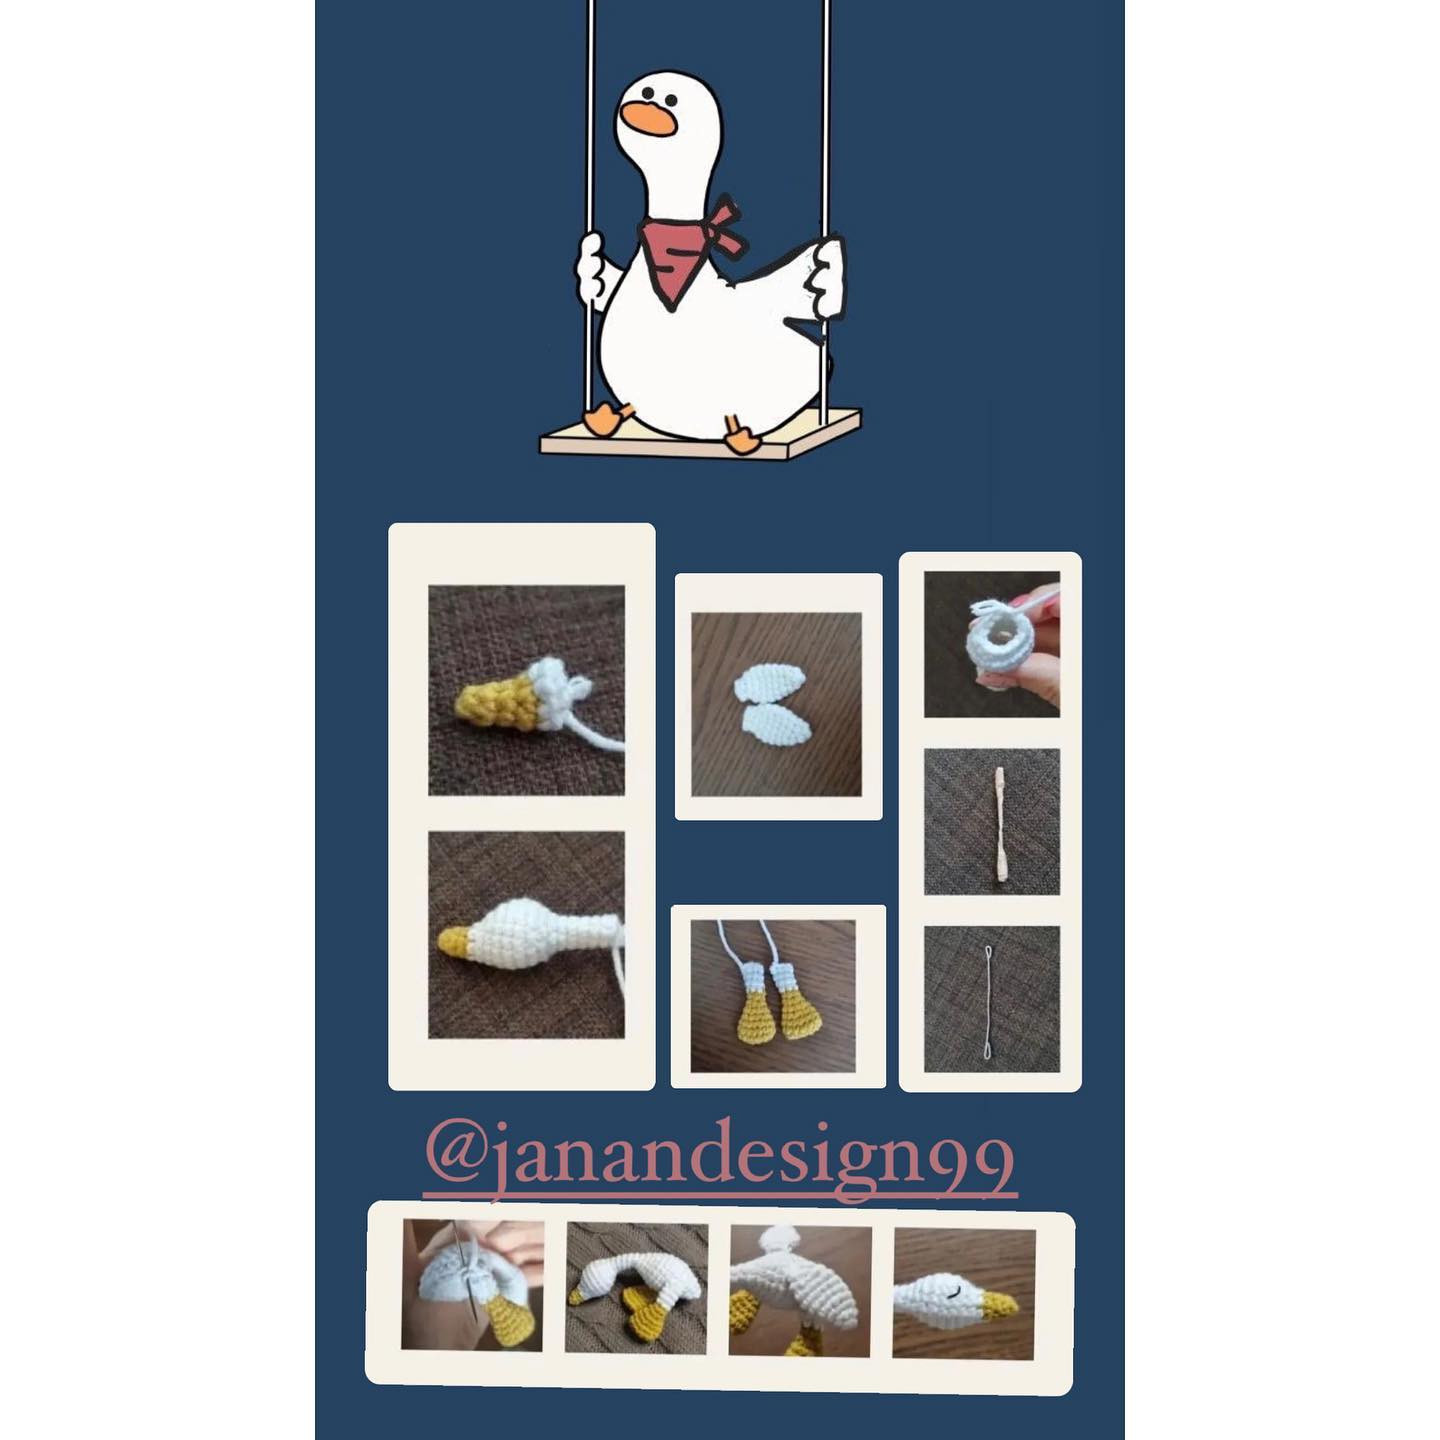 White duck, yellow bill, yellow legs.crochet pattern